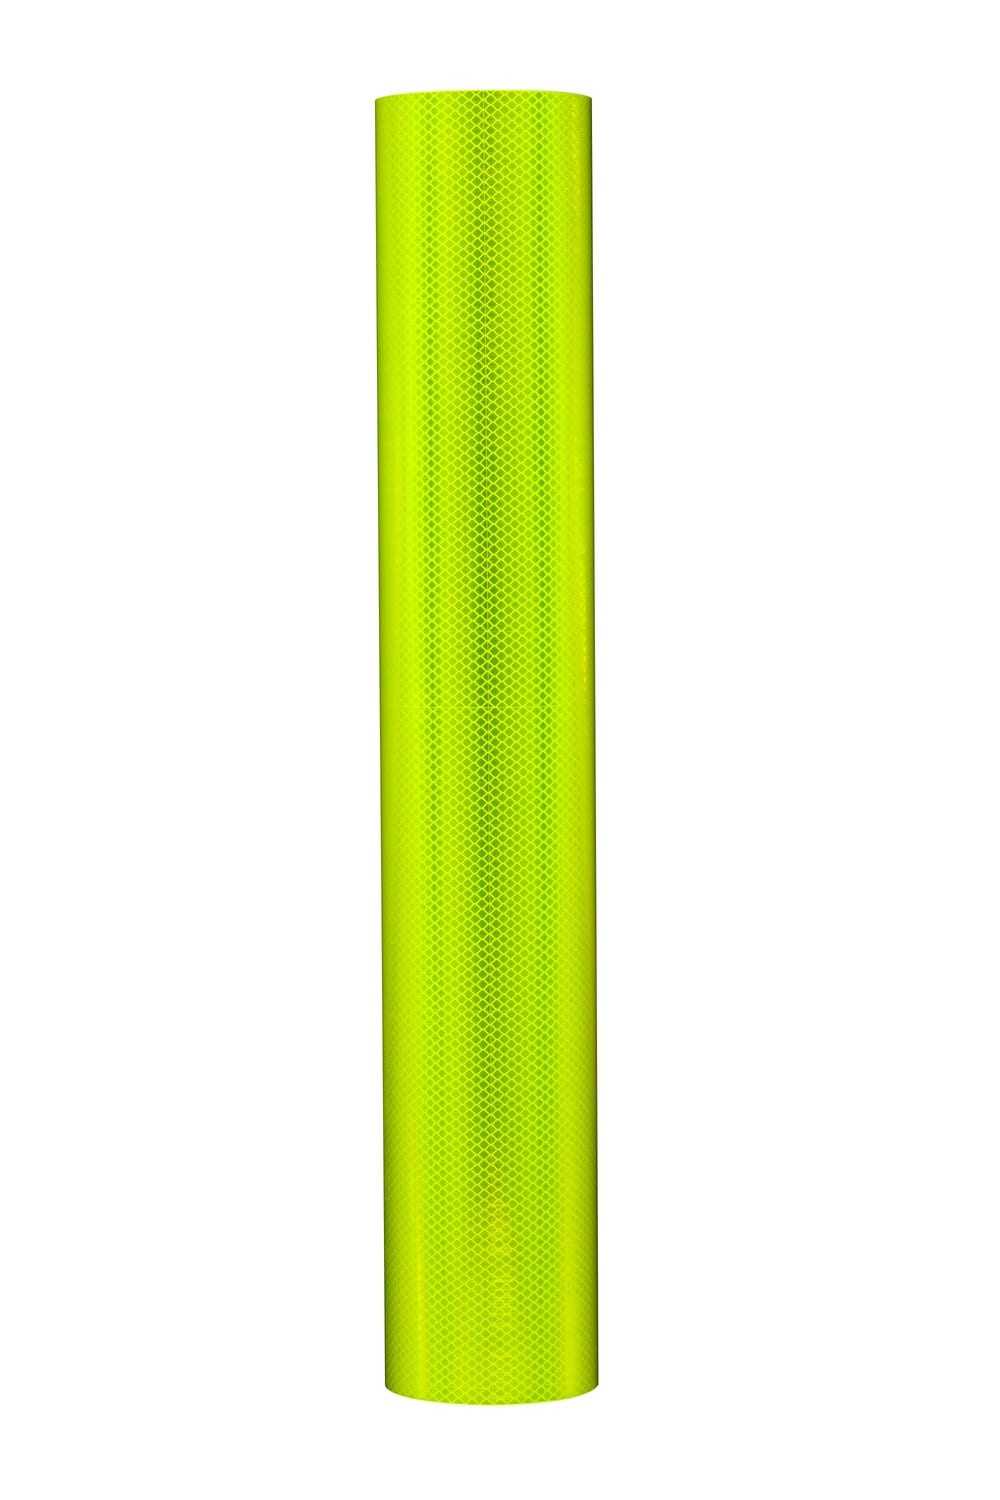 7100008247 - 3M Diamond Grade DG³ Reflective Sheeting 4083, Fluorescent
Yellow-Green, Configurable